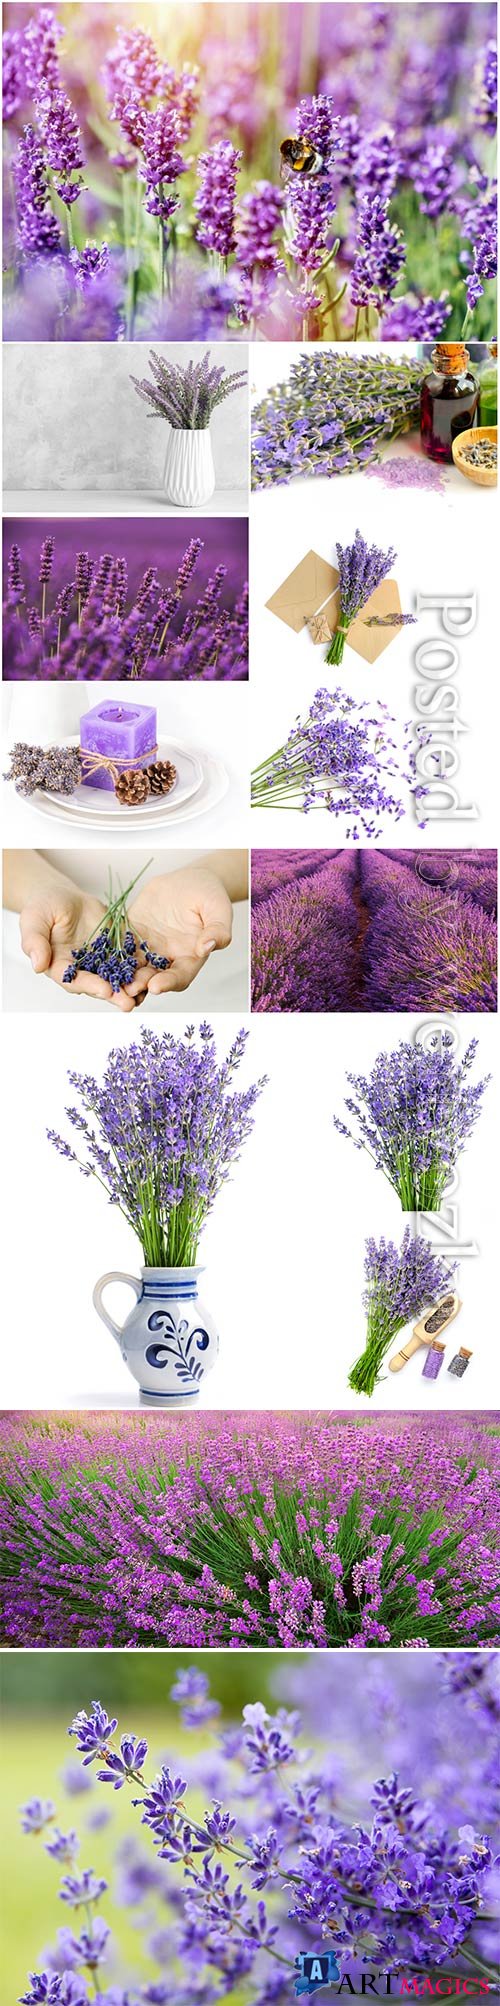 Beautiful lavender flowers